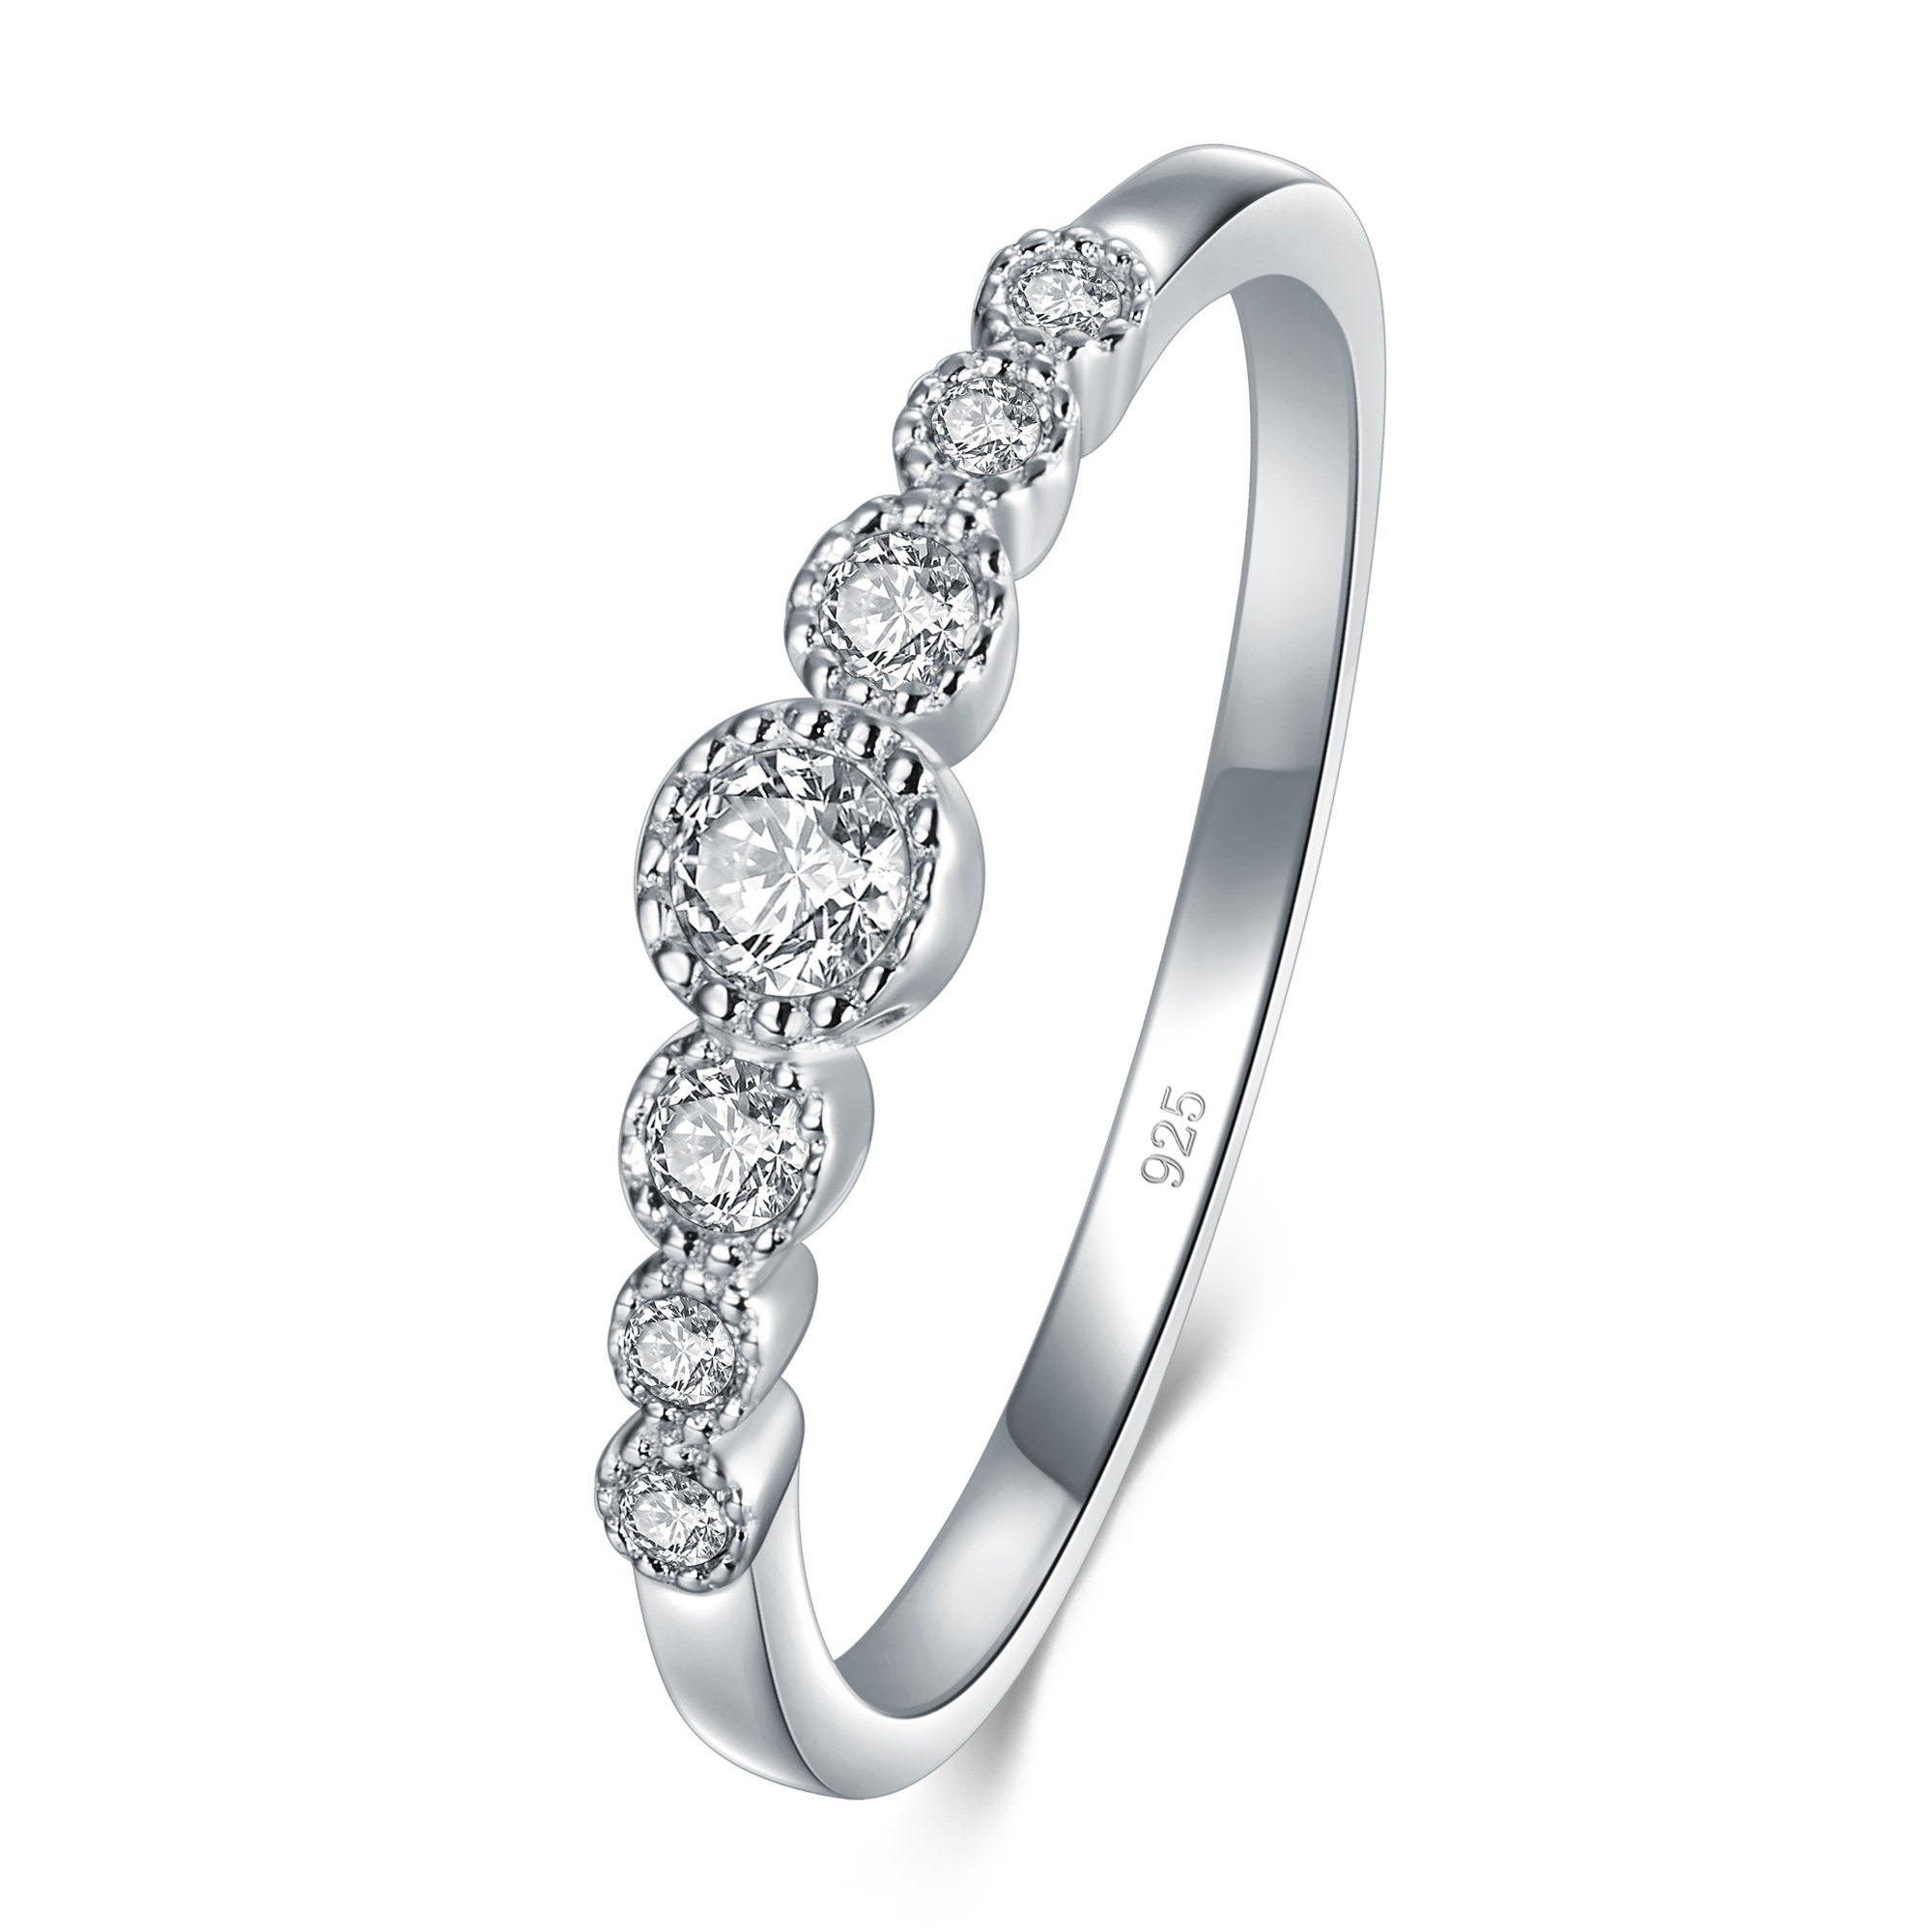 BORUO 925 Sterling Silver Ring Cubic Zirconia Princess Crown Tiara Wedding Cz Band Eternity Ring Size 4-12 